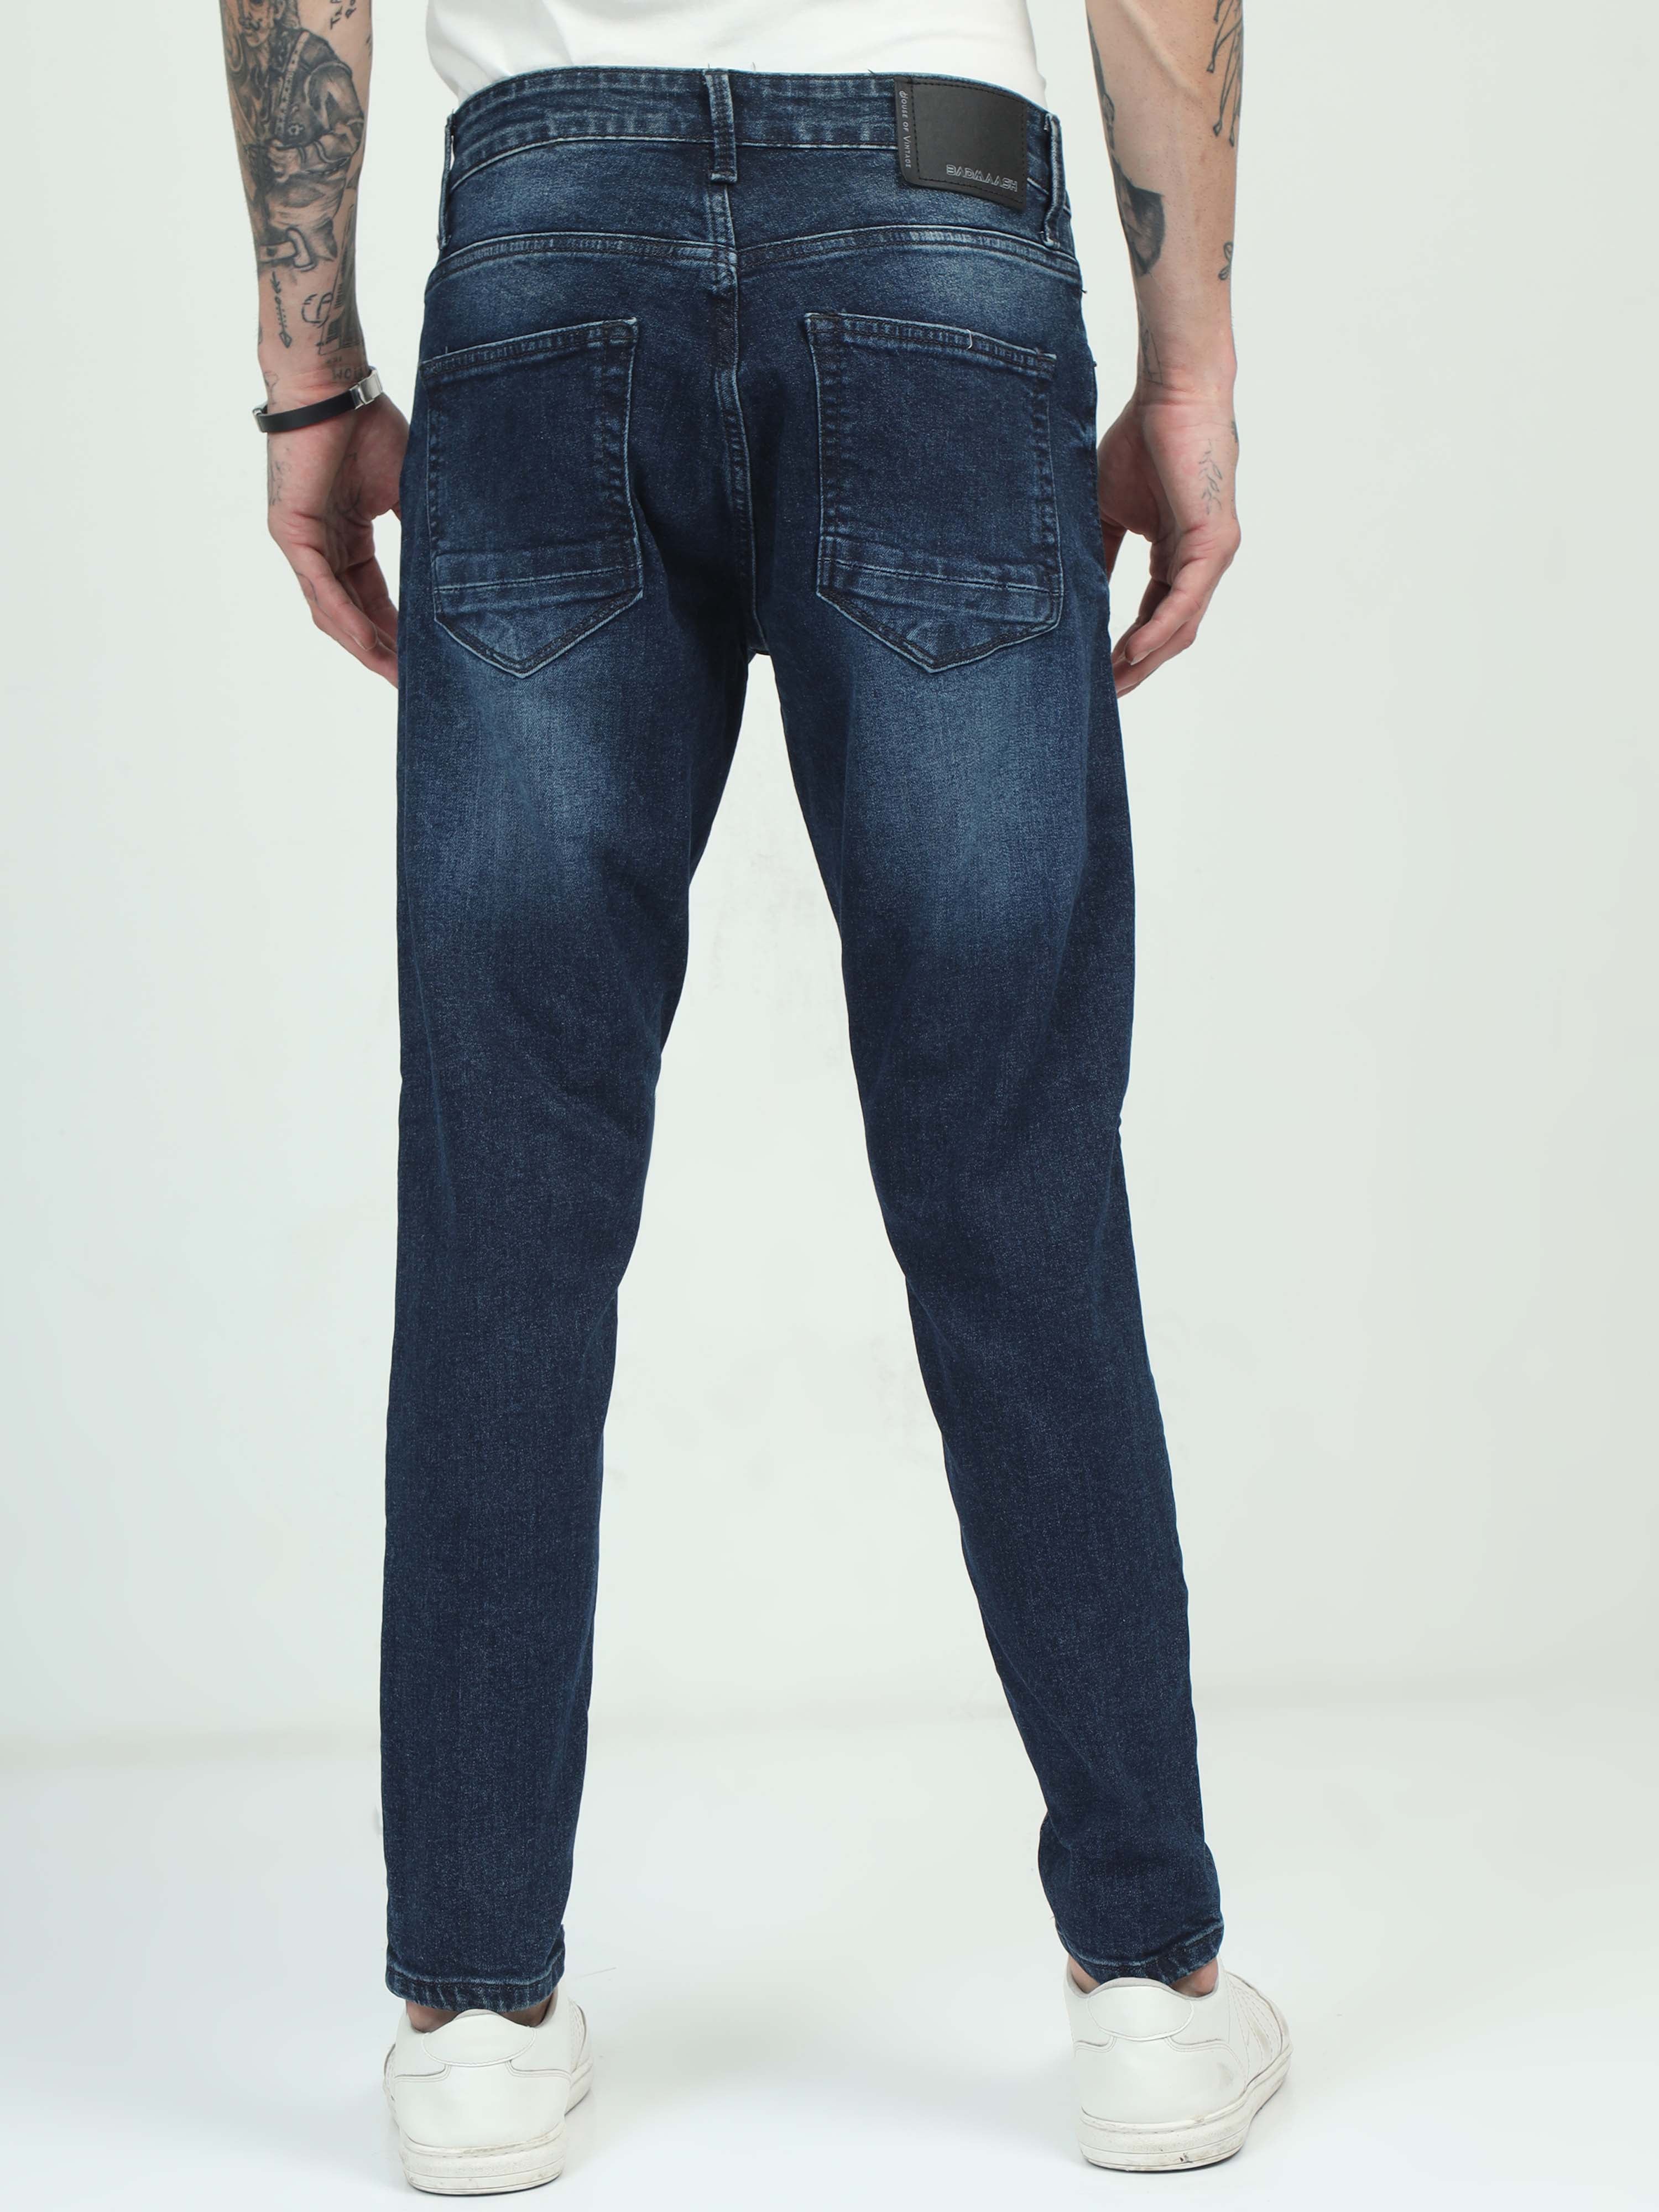 Hague Blue Skinny Jeans